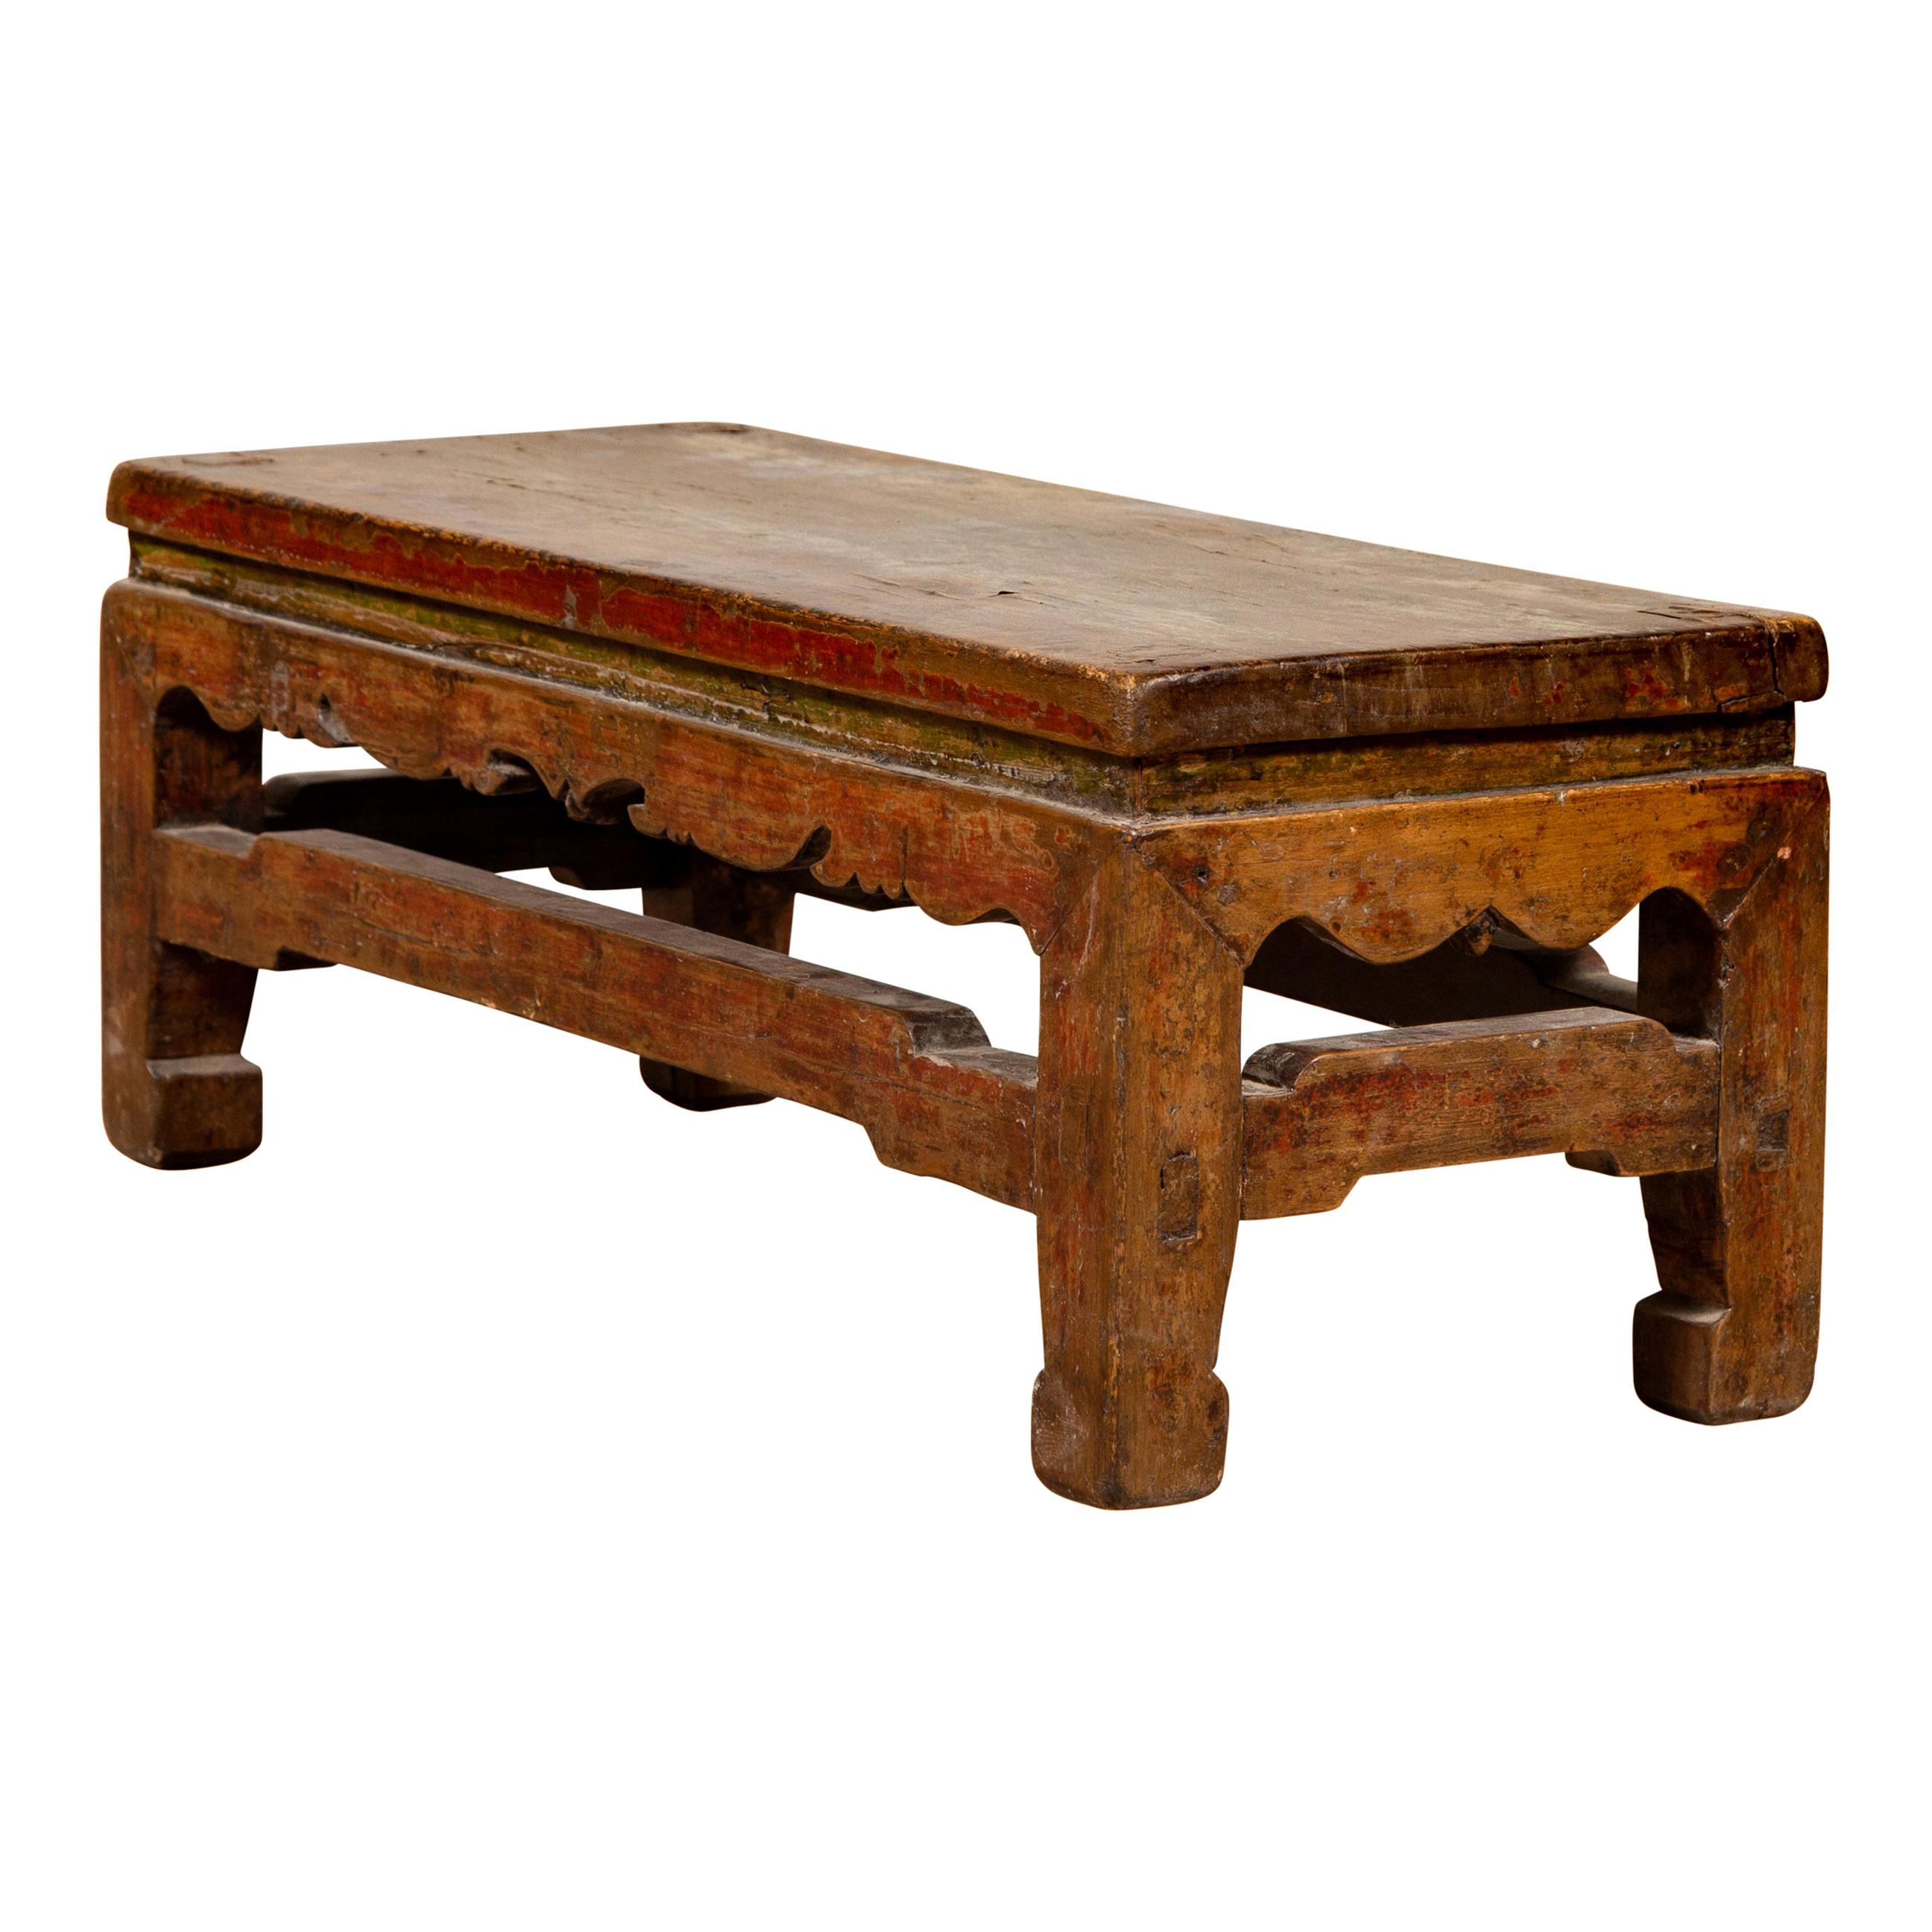 Chinese Primitive Low Prayer Table with Multi-color Underglaze Design circa 1800